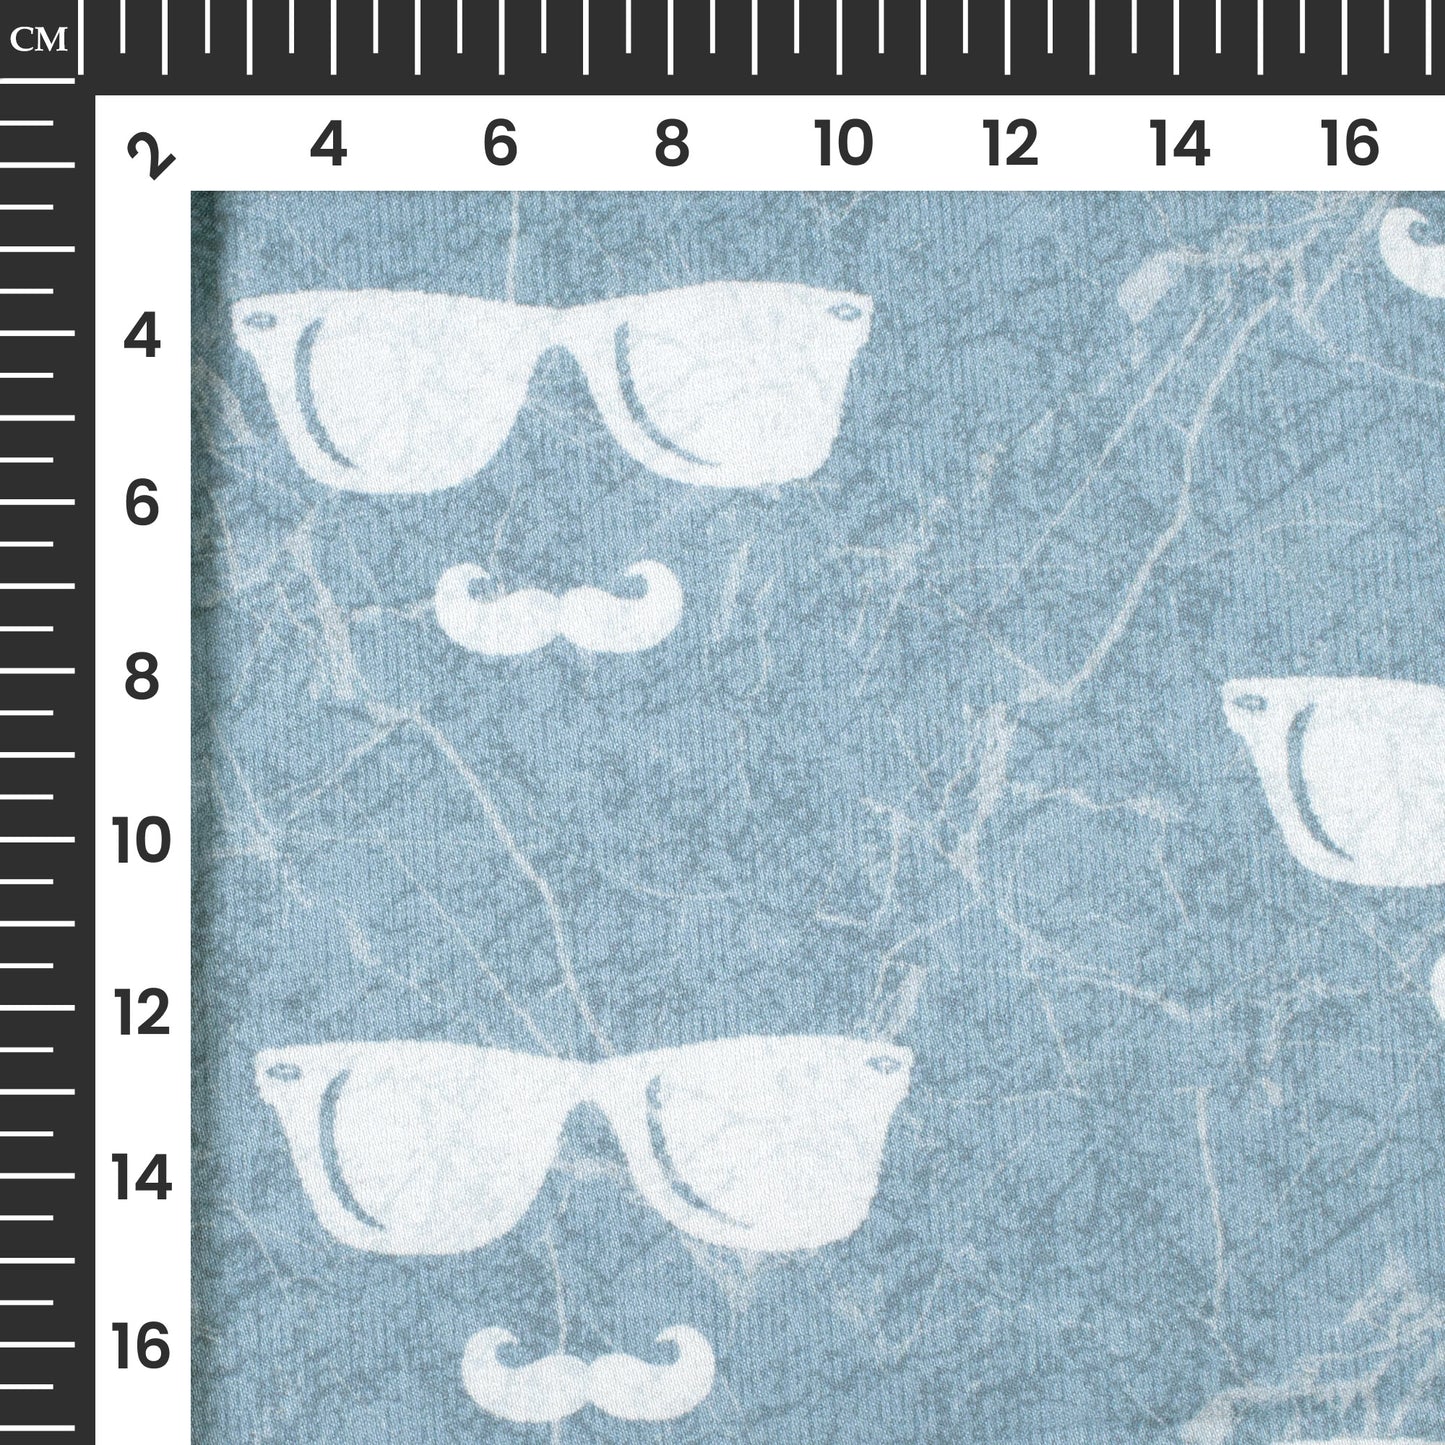 Chetwode Blue And White Quirky Pattern Digital Print Premium Lush Satin Fabric